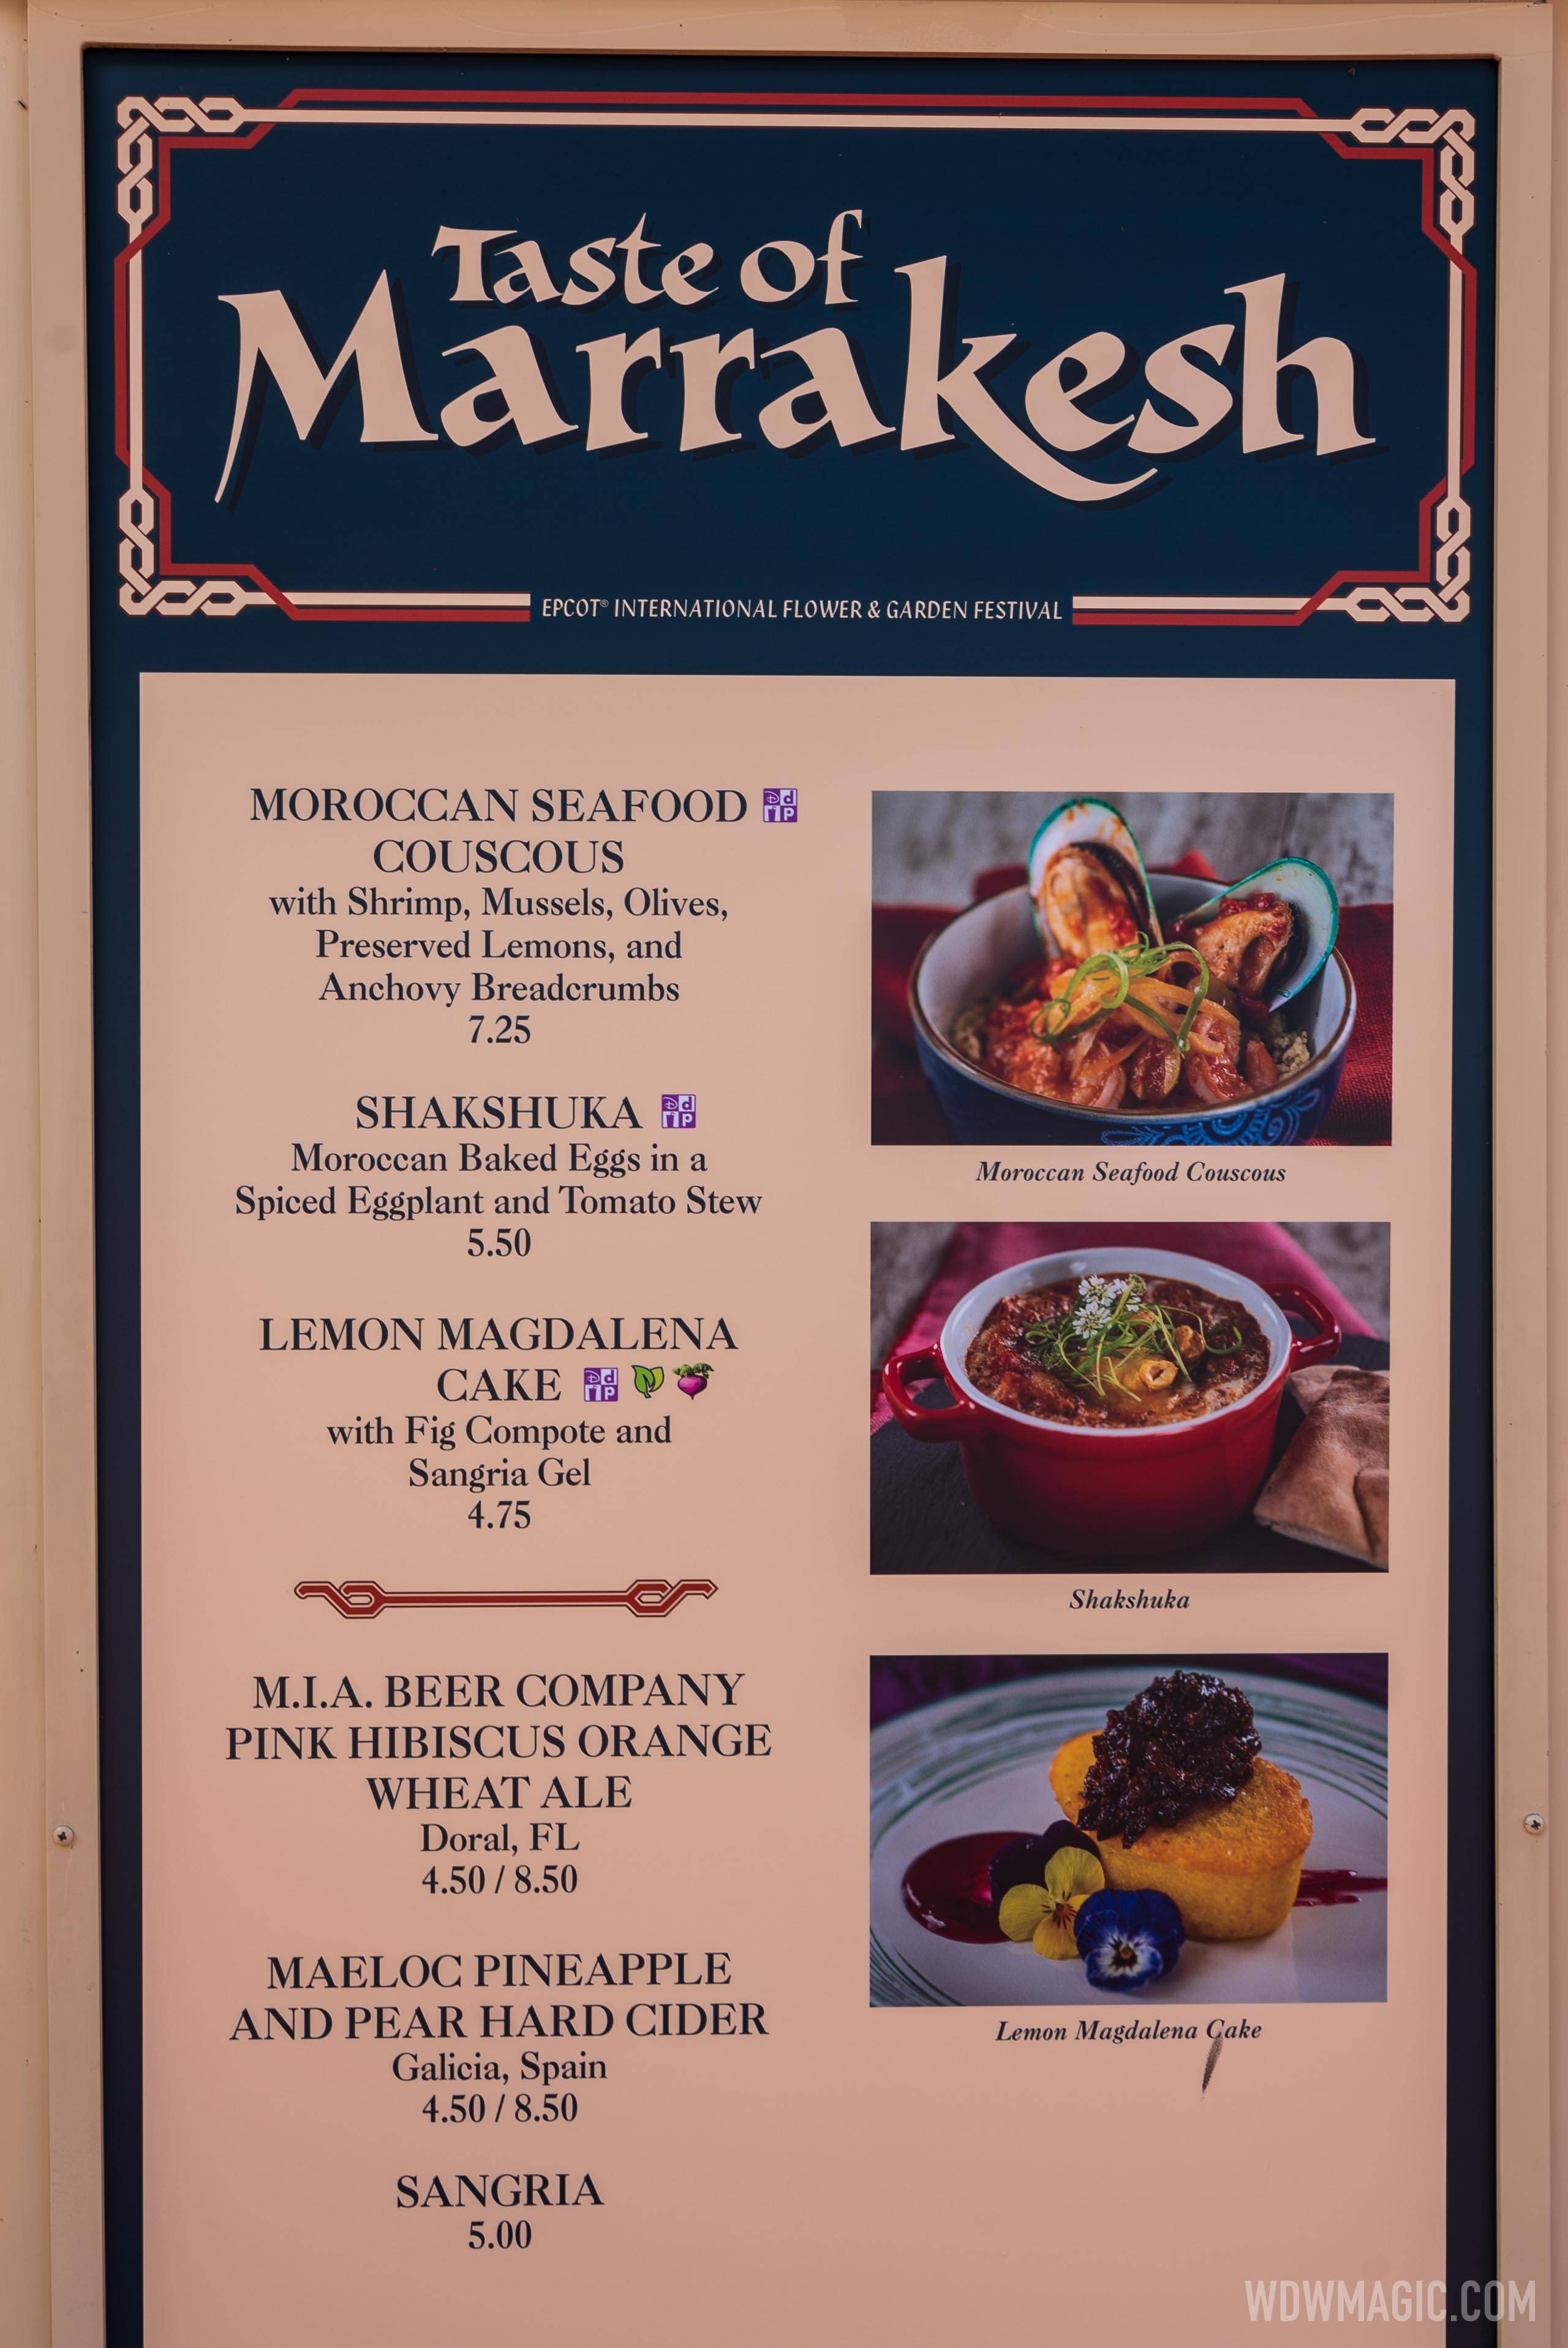 Taste of Marrakesh kiosk menu